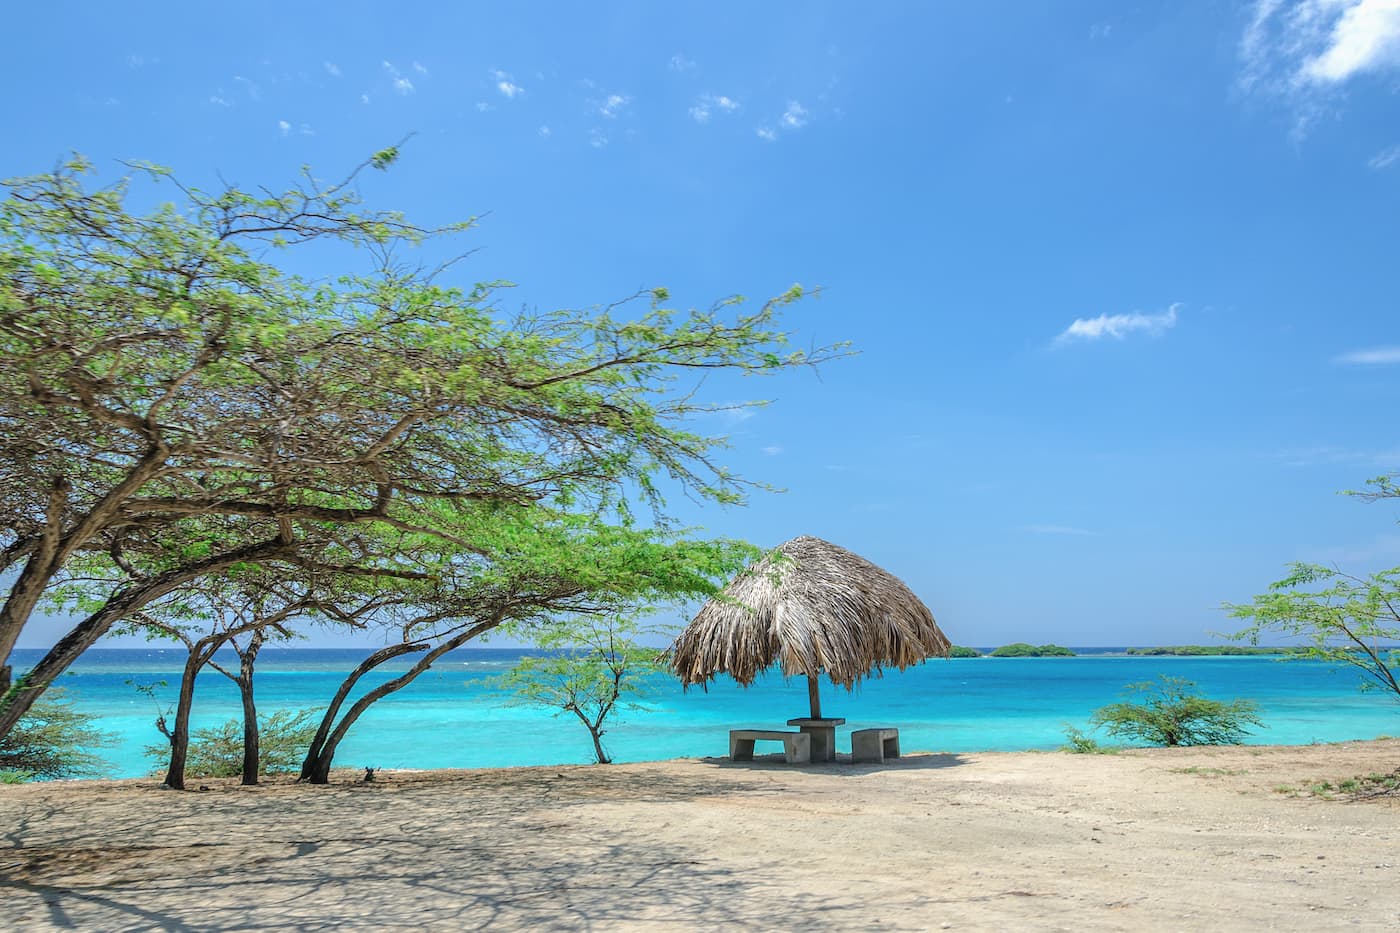 Picture-perfect scenery at Mangel Halto Beach, Aruba, Dutch Caribbean.